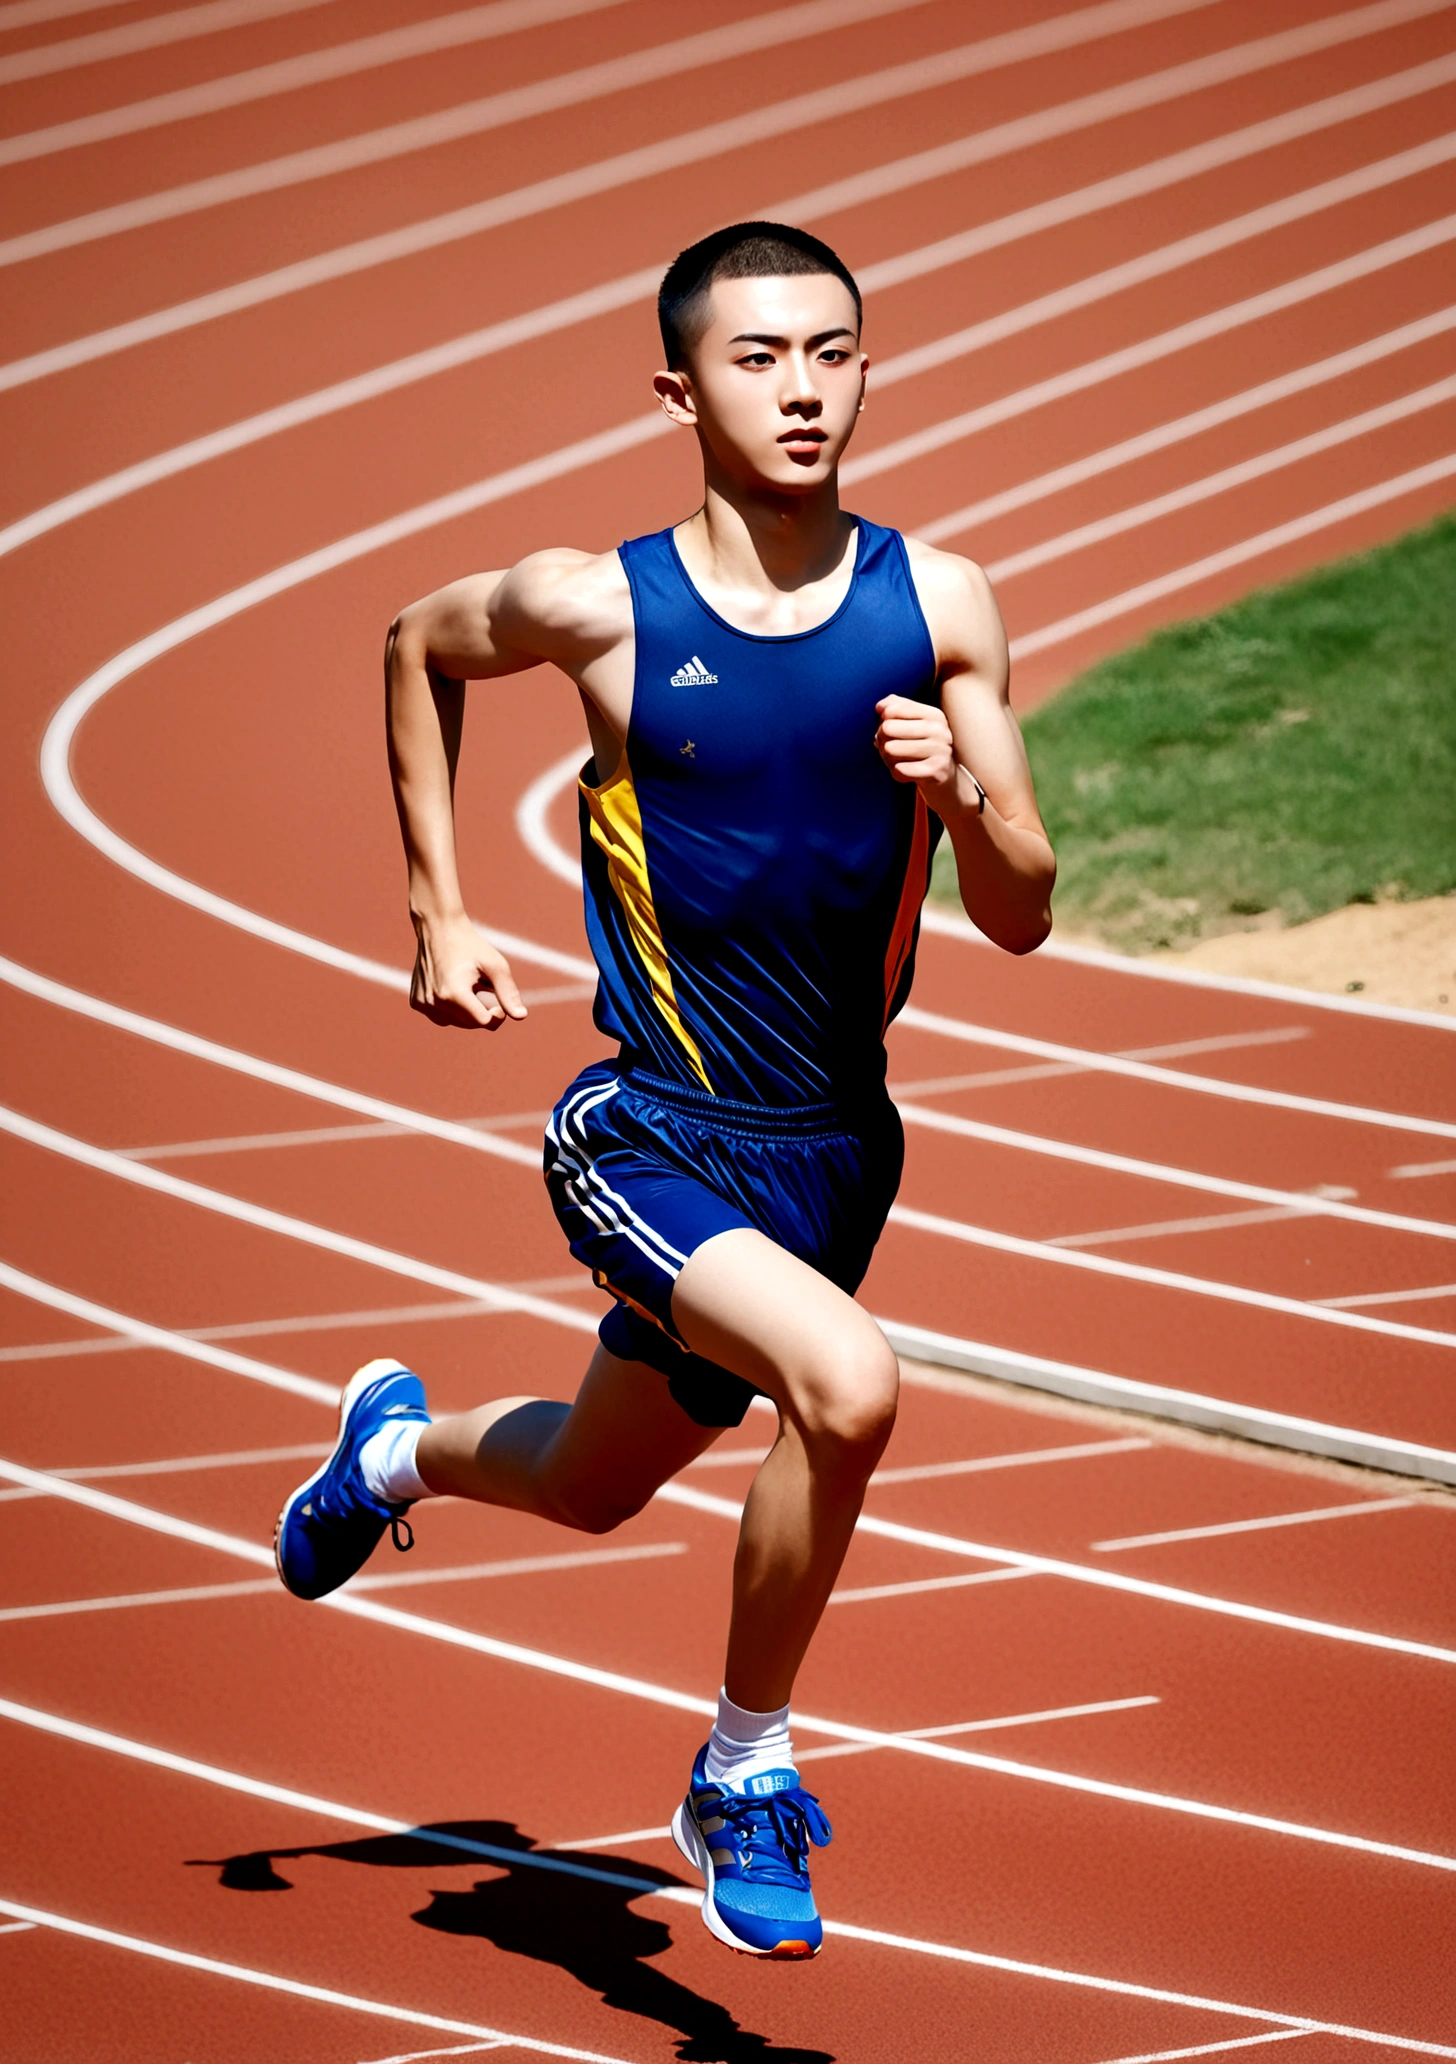 Chinese boys，18 years old，Athlete，Buzz cut，short hair，Single eyelid，whole body，Wear sportswear，Running on the track，